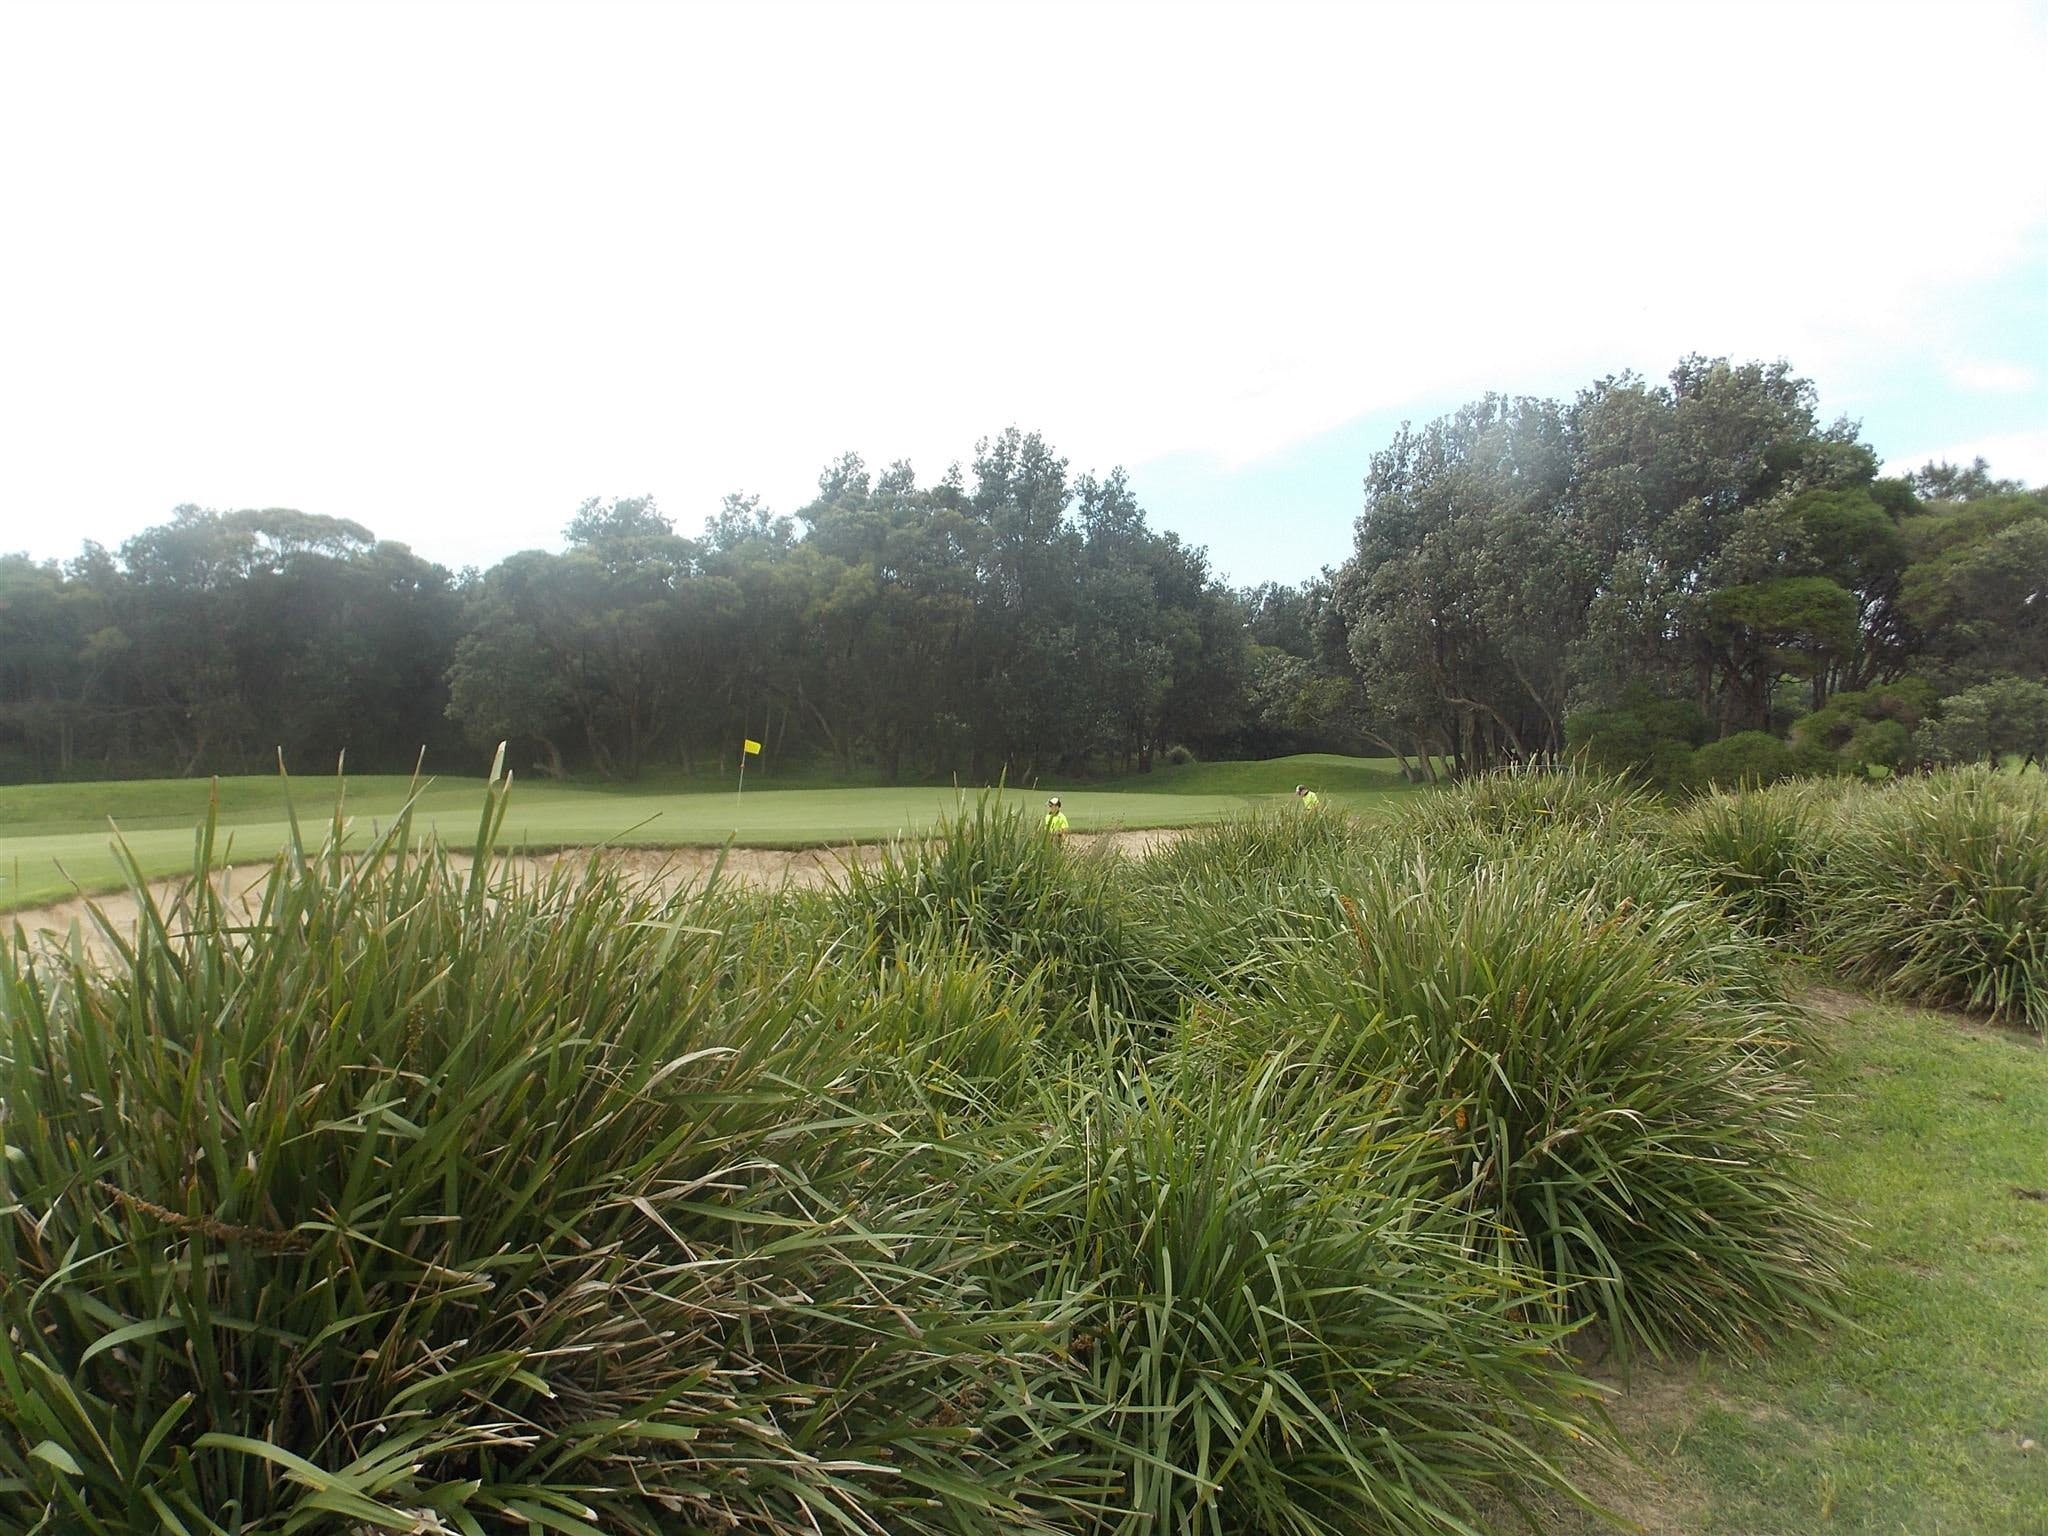 Shoalhaven Heads Golf Club - Tourism Adelaide